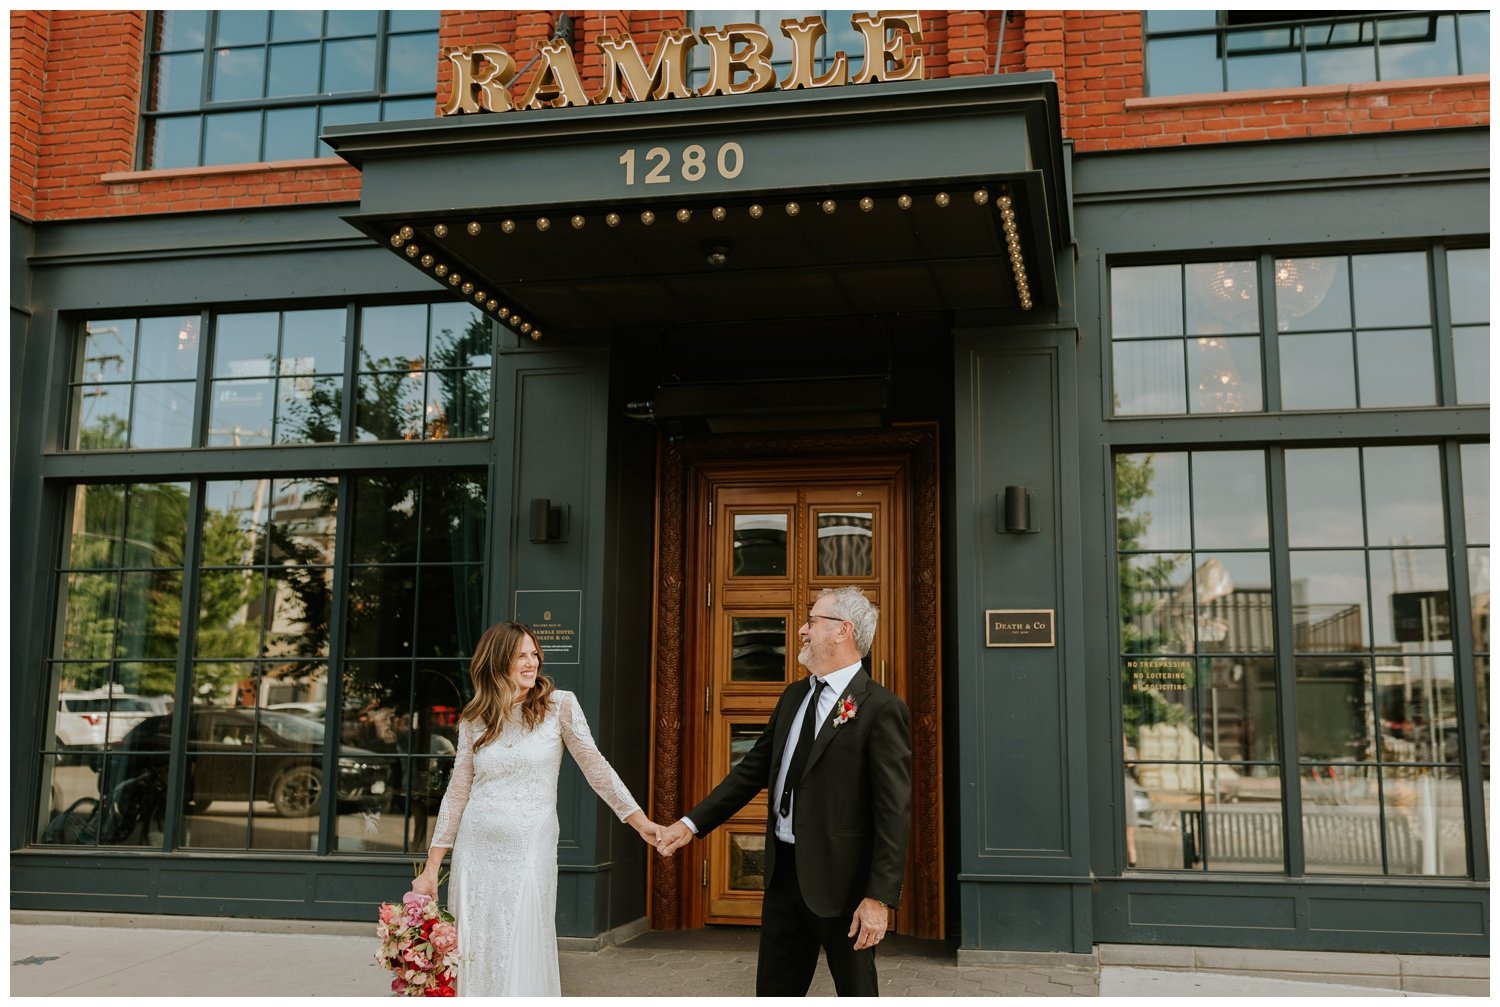 Ramble Hotel Denver + Mt. Falcon Indian Hills Colorado Elopement Photography_0022.jpg